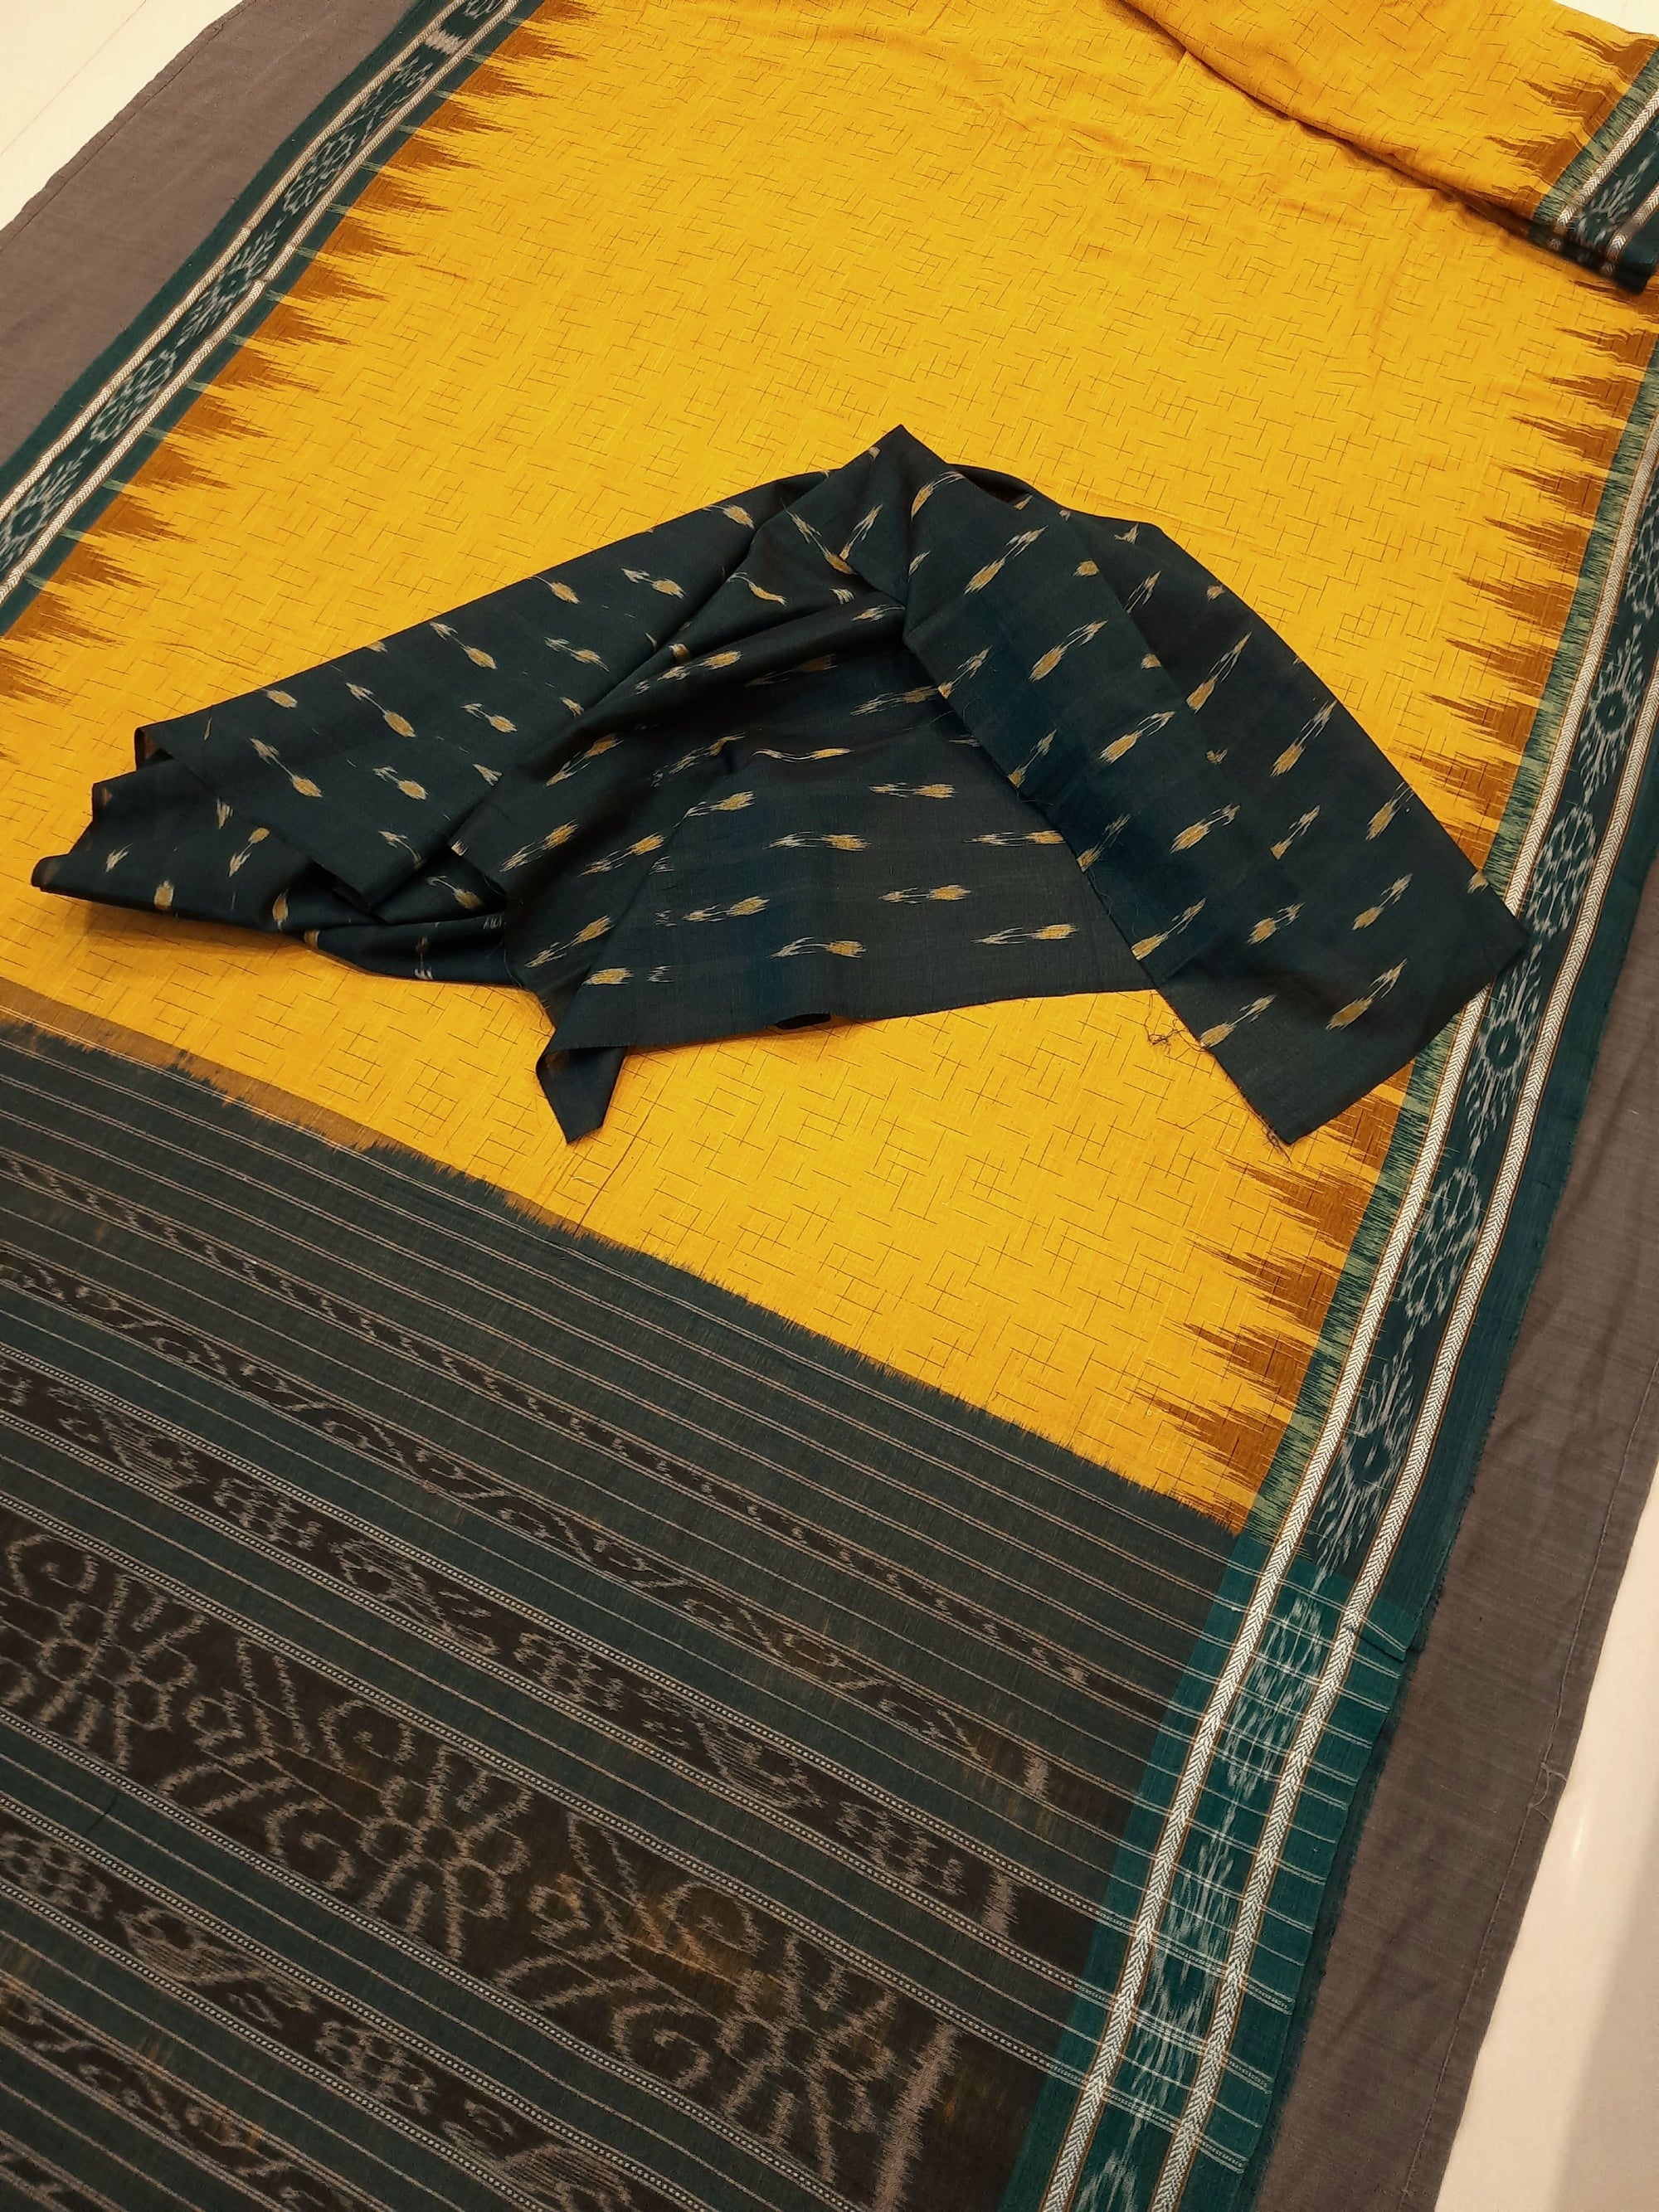 Yellow Odisha Ikat saree  with mix match cotton ikat blouse